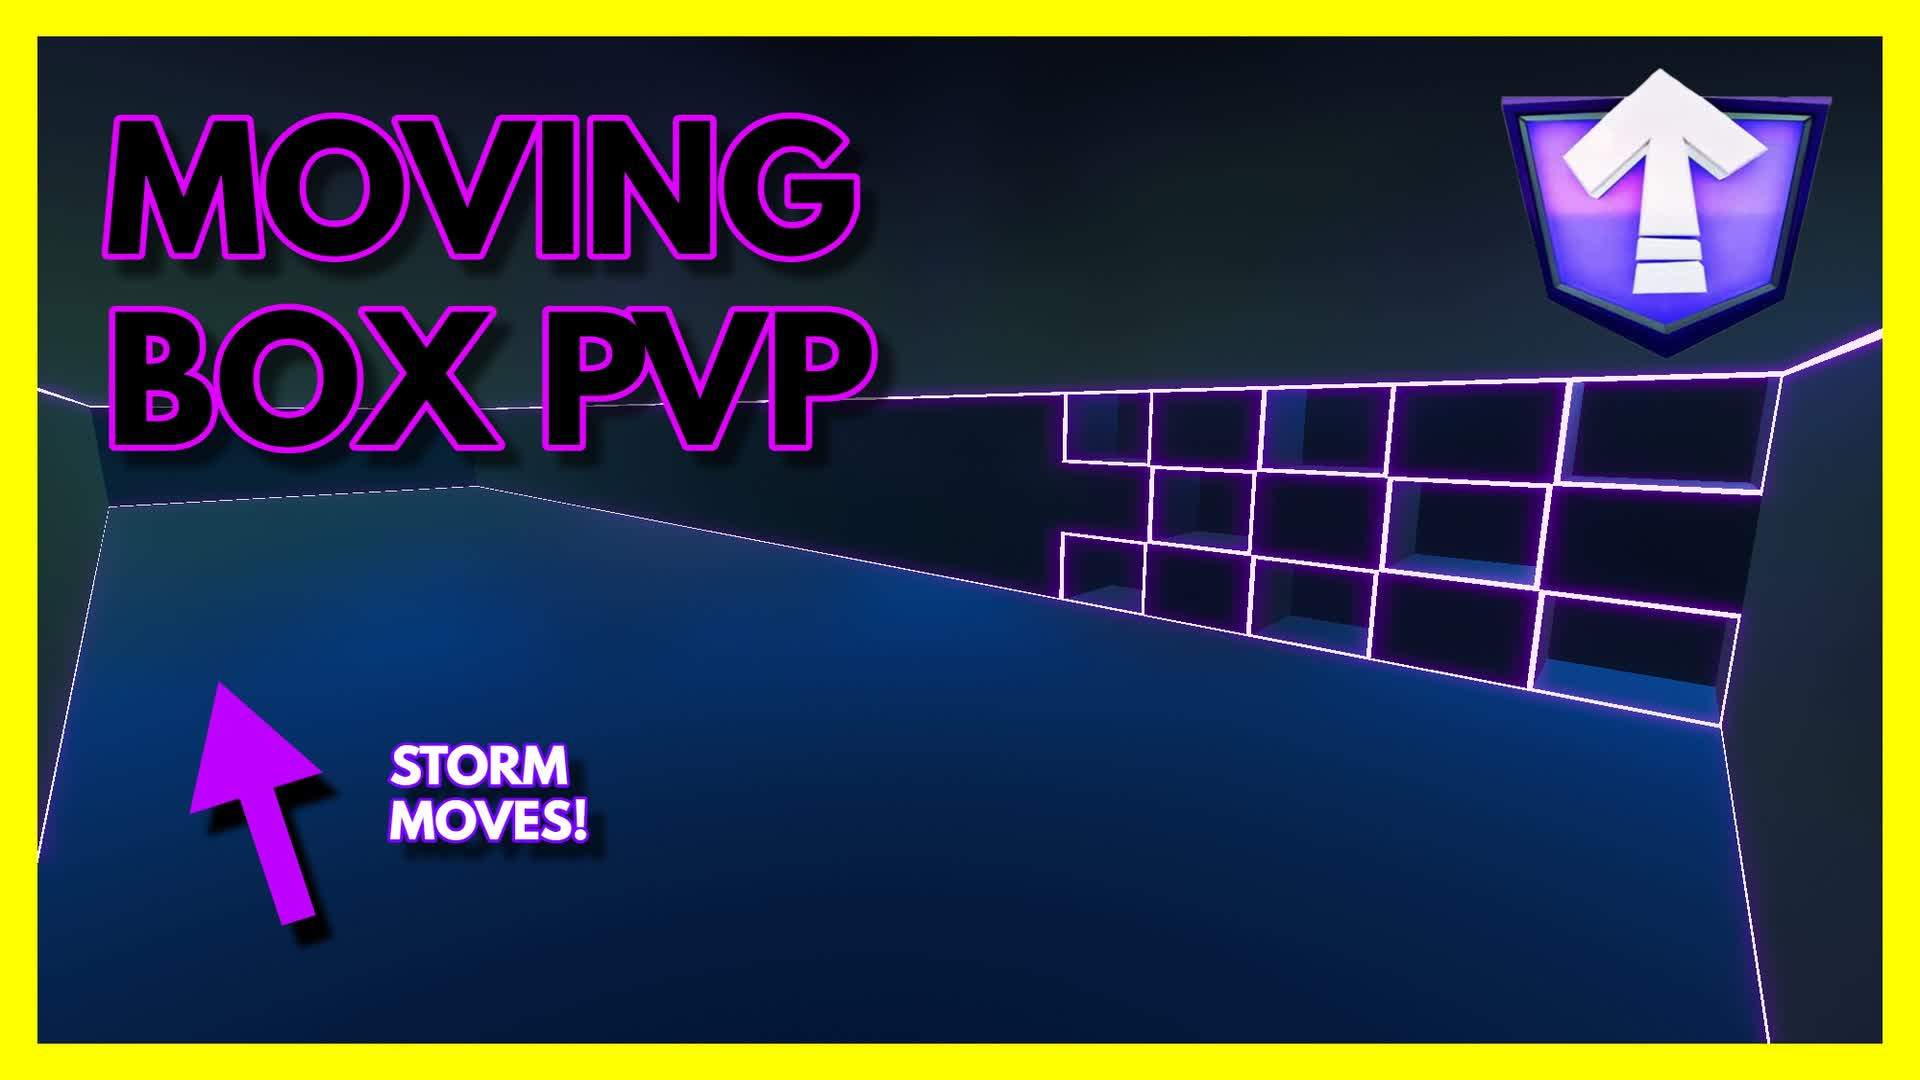 MOVING BOX PVP